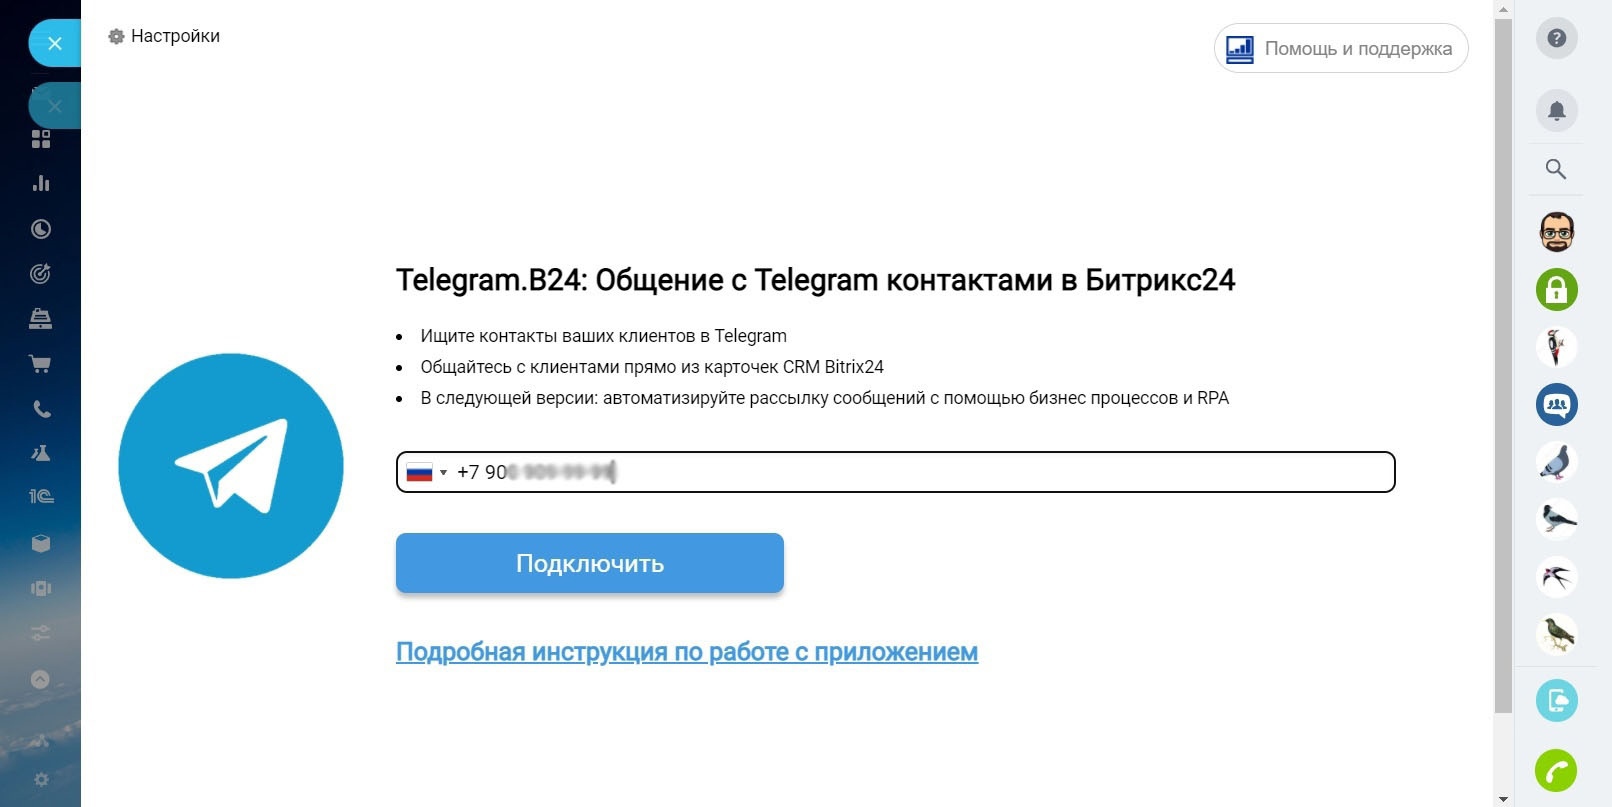 Установить приложение телеграмм бесплатно на телефон без регистрации фото 66